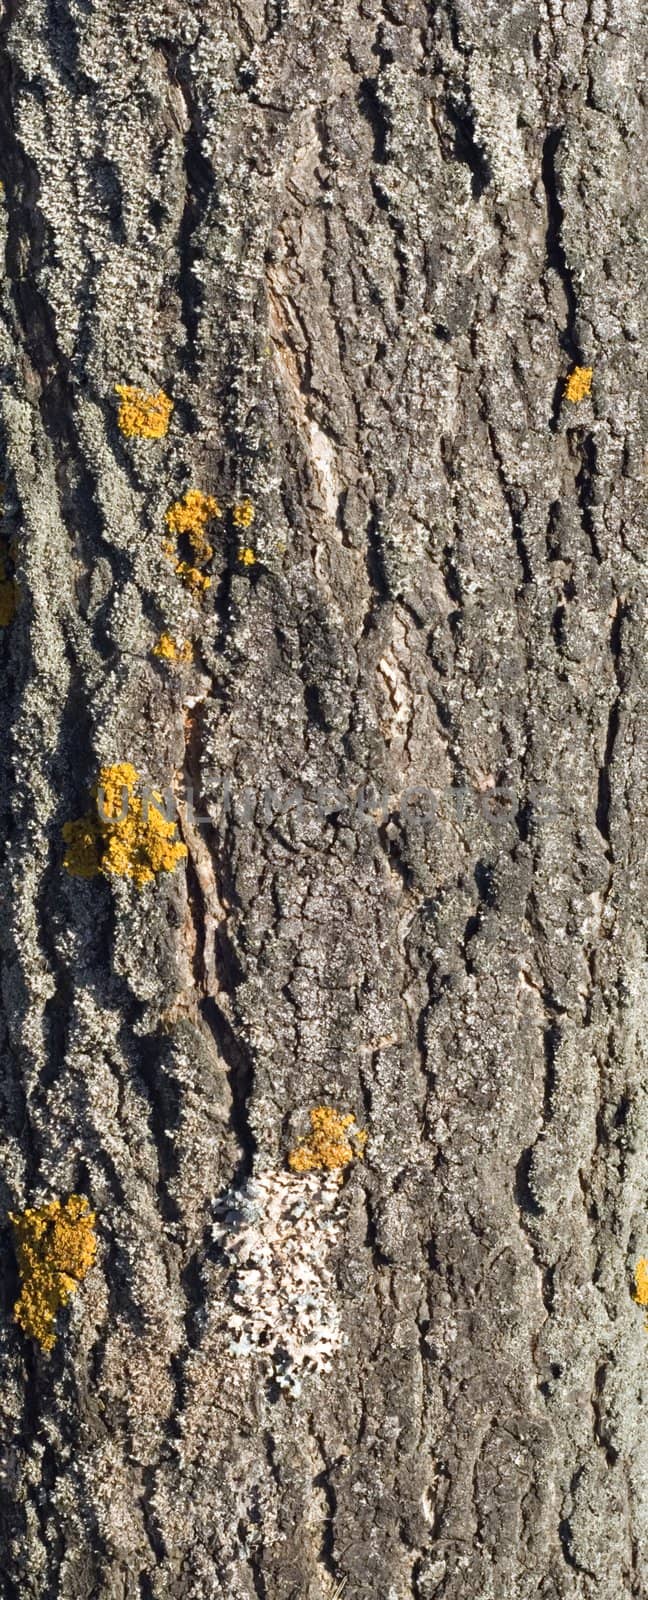 Fungus on old tree by Vladyslav